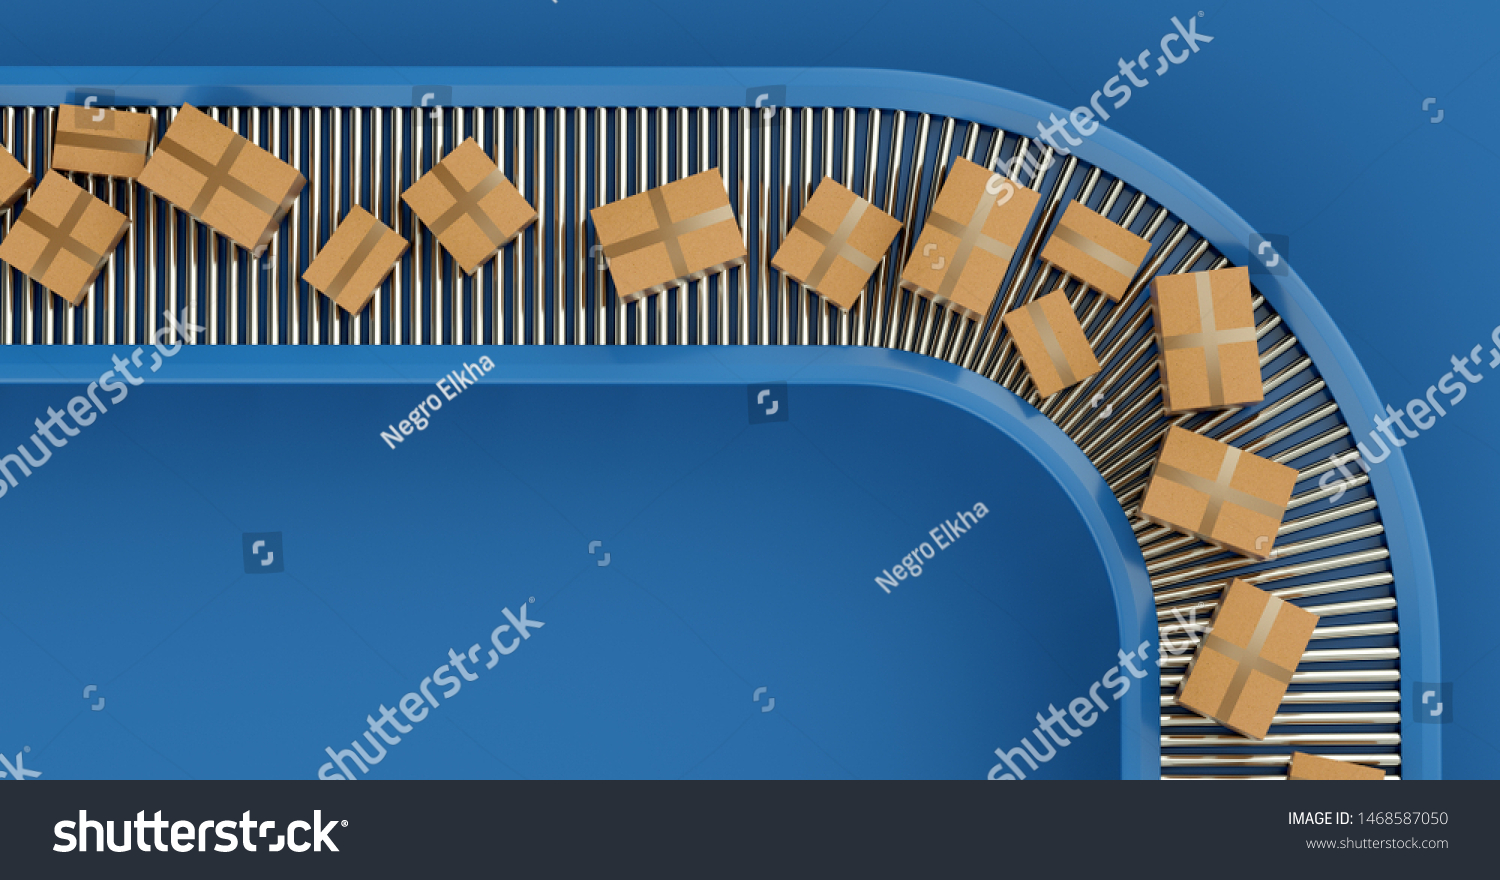 Conveyor belt with orders. Automatic mechanized logistics. 3D Illustration. #1468587050